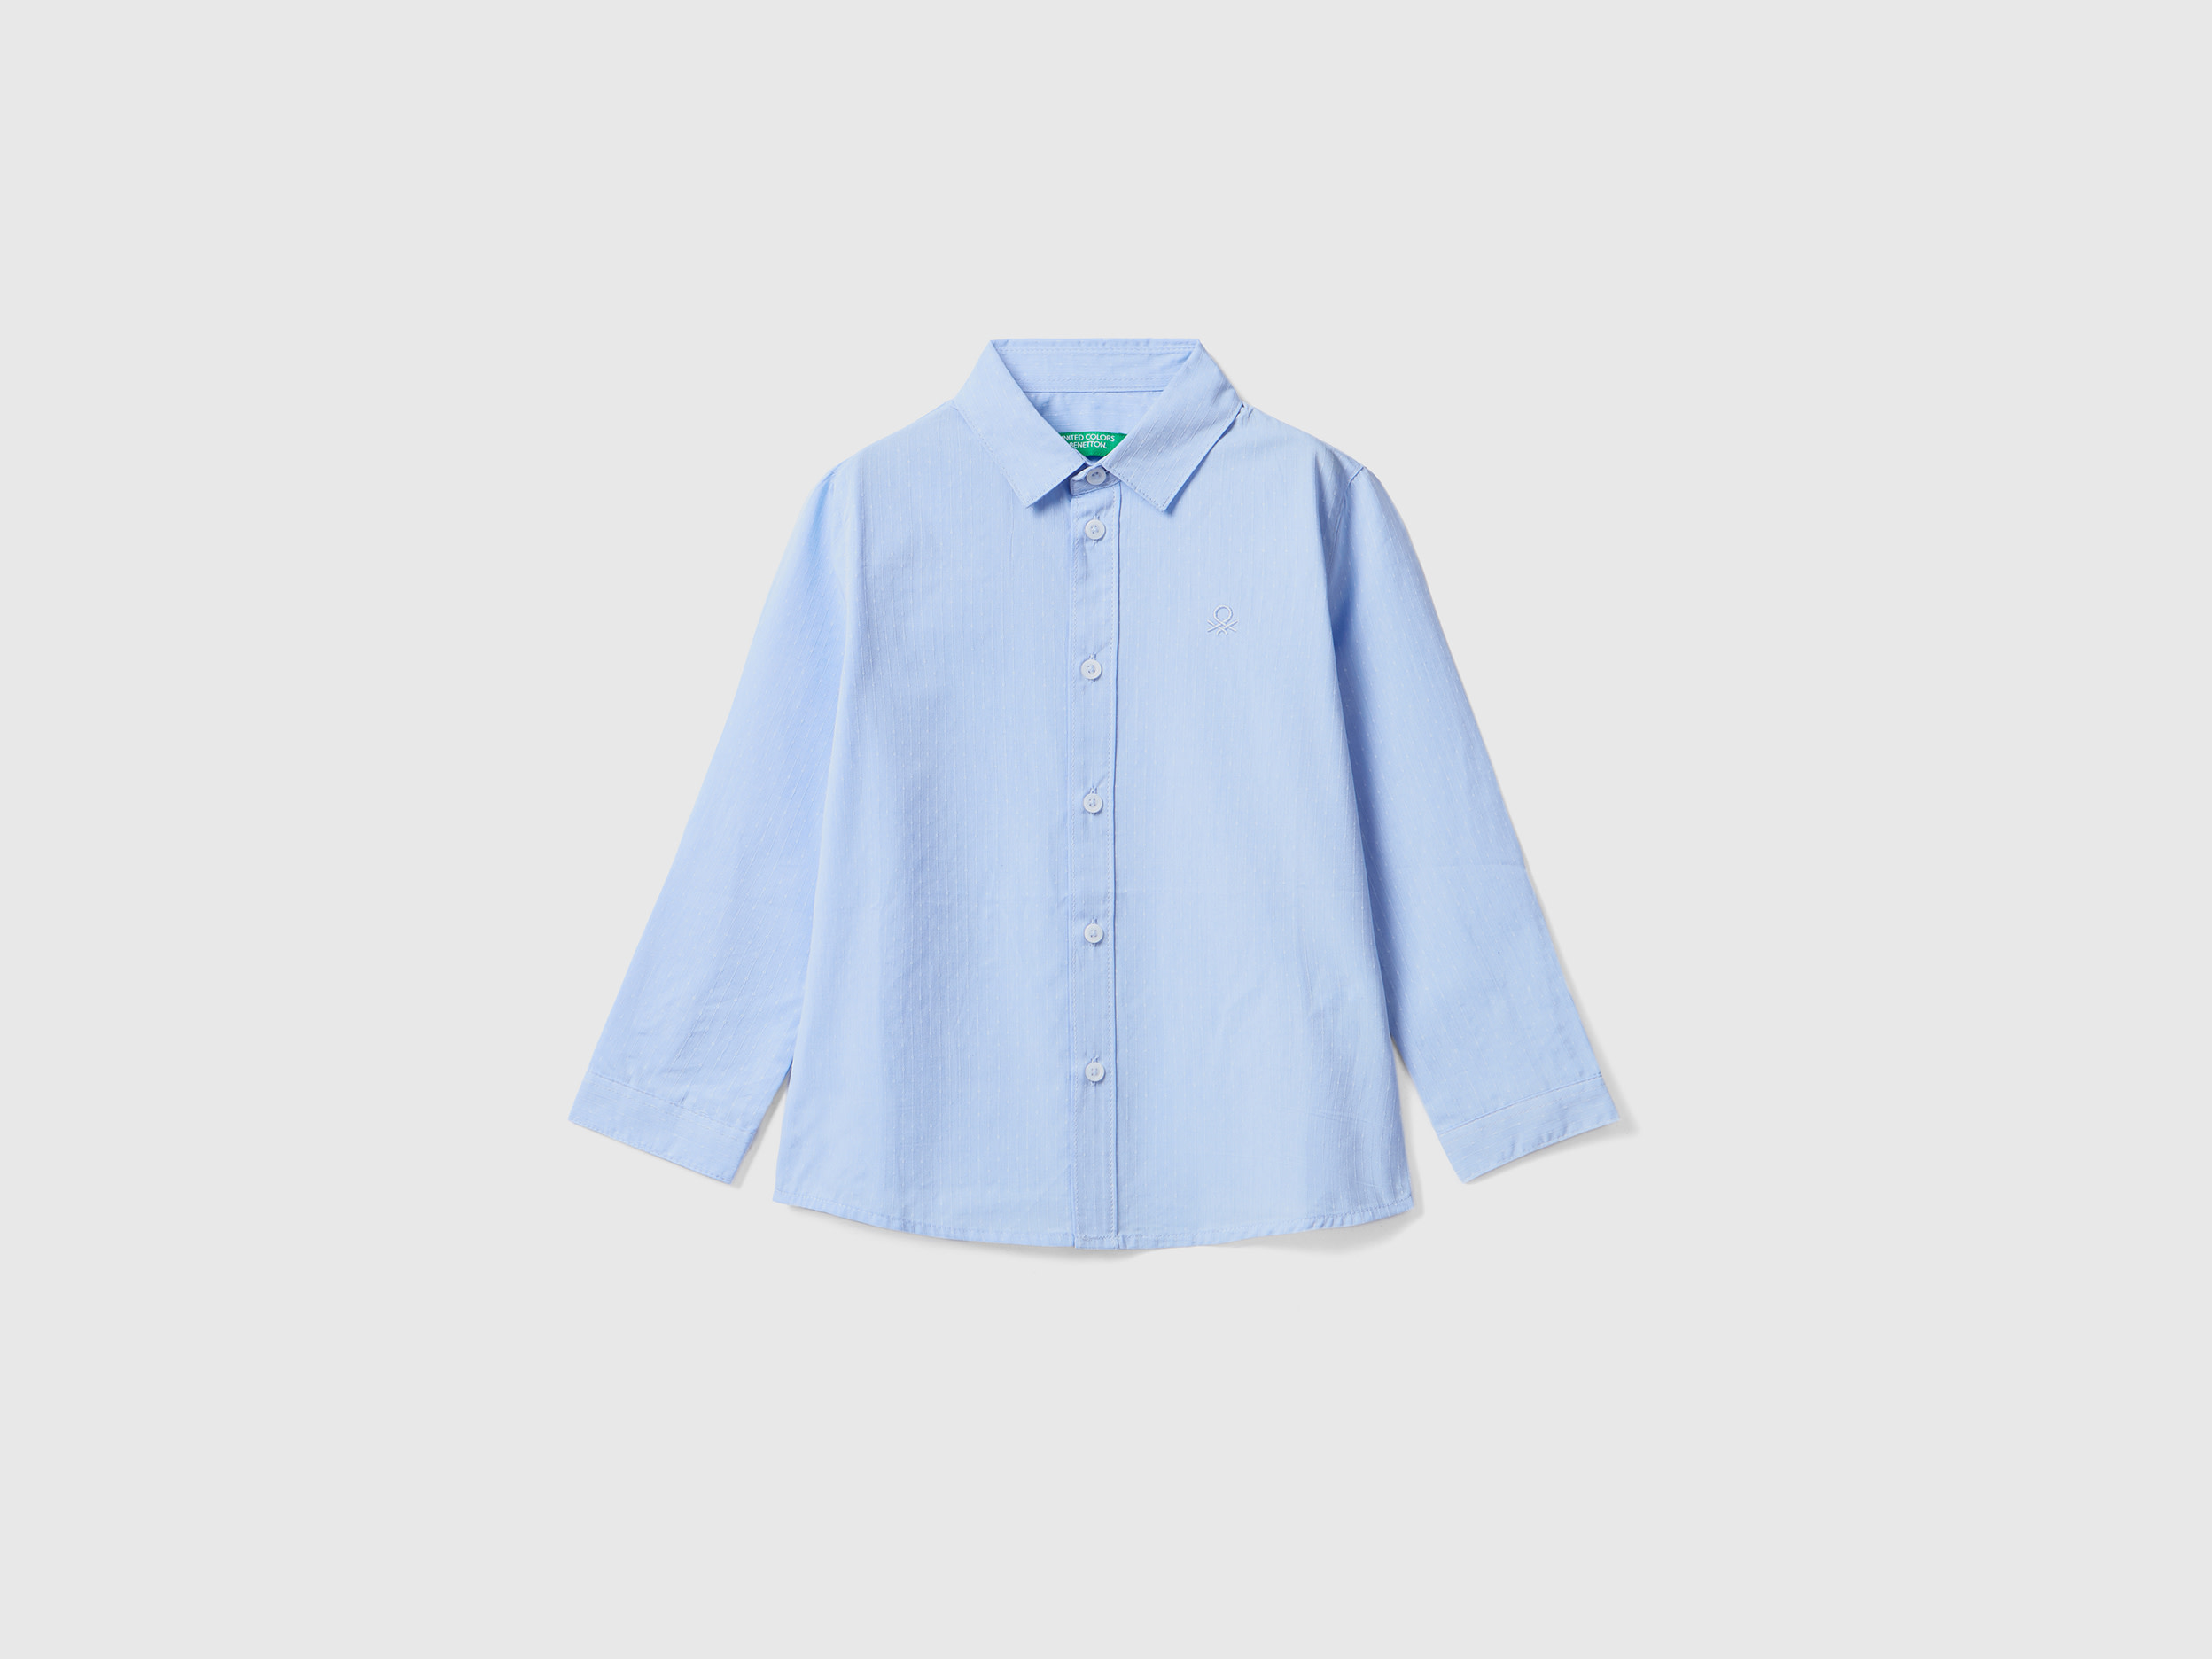 Benetton, Classic Shirt In Pure Cotton, size 4-5, Sky Blue, Kids